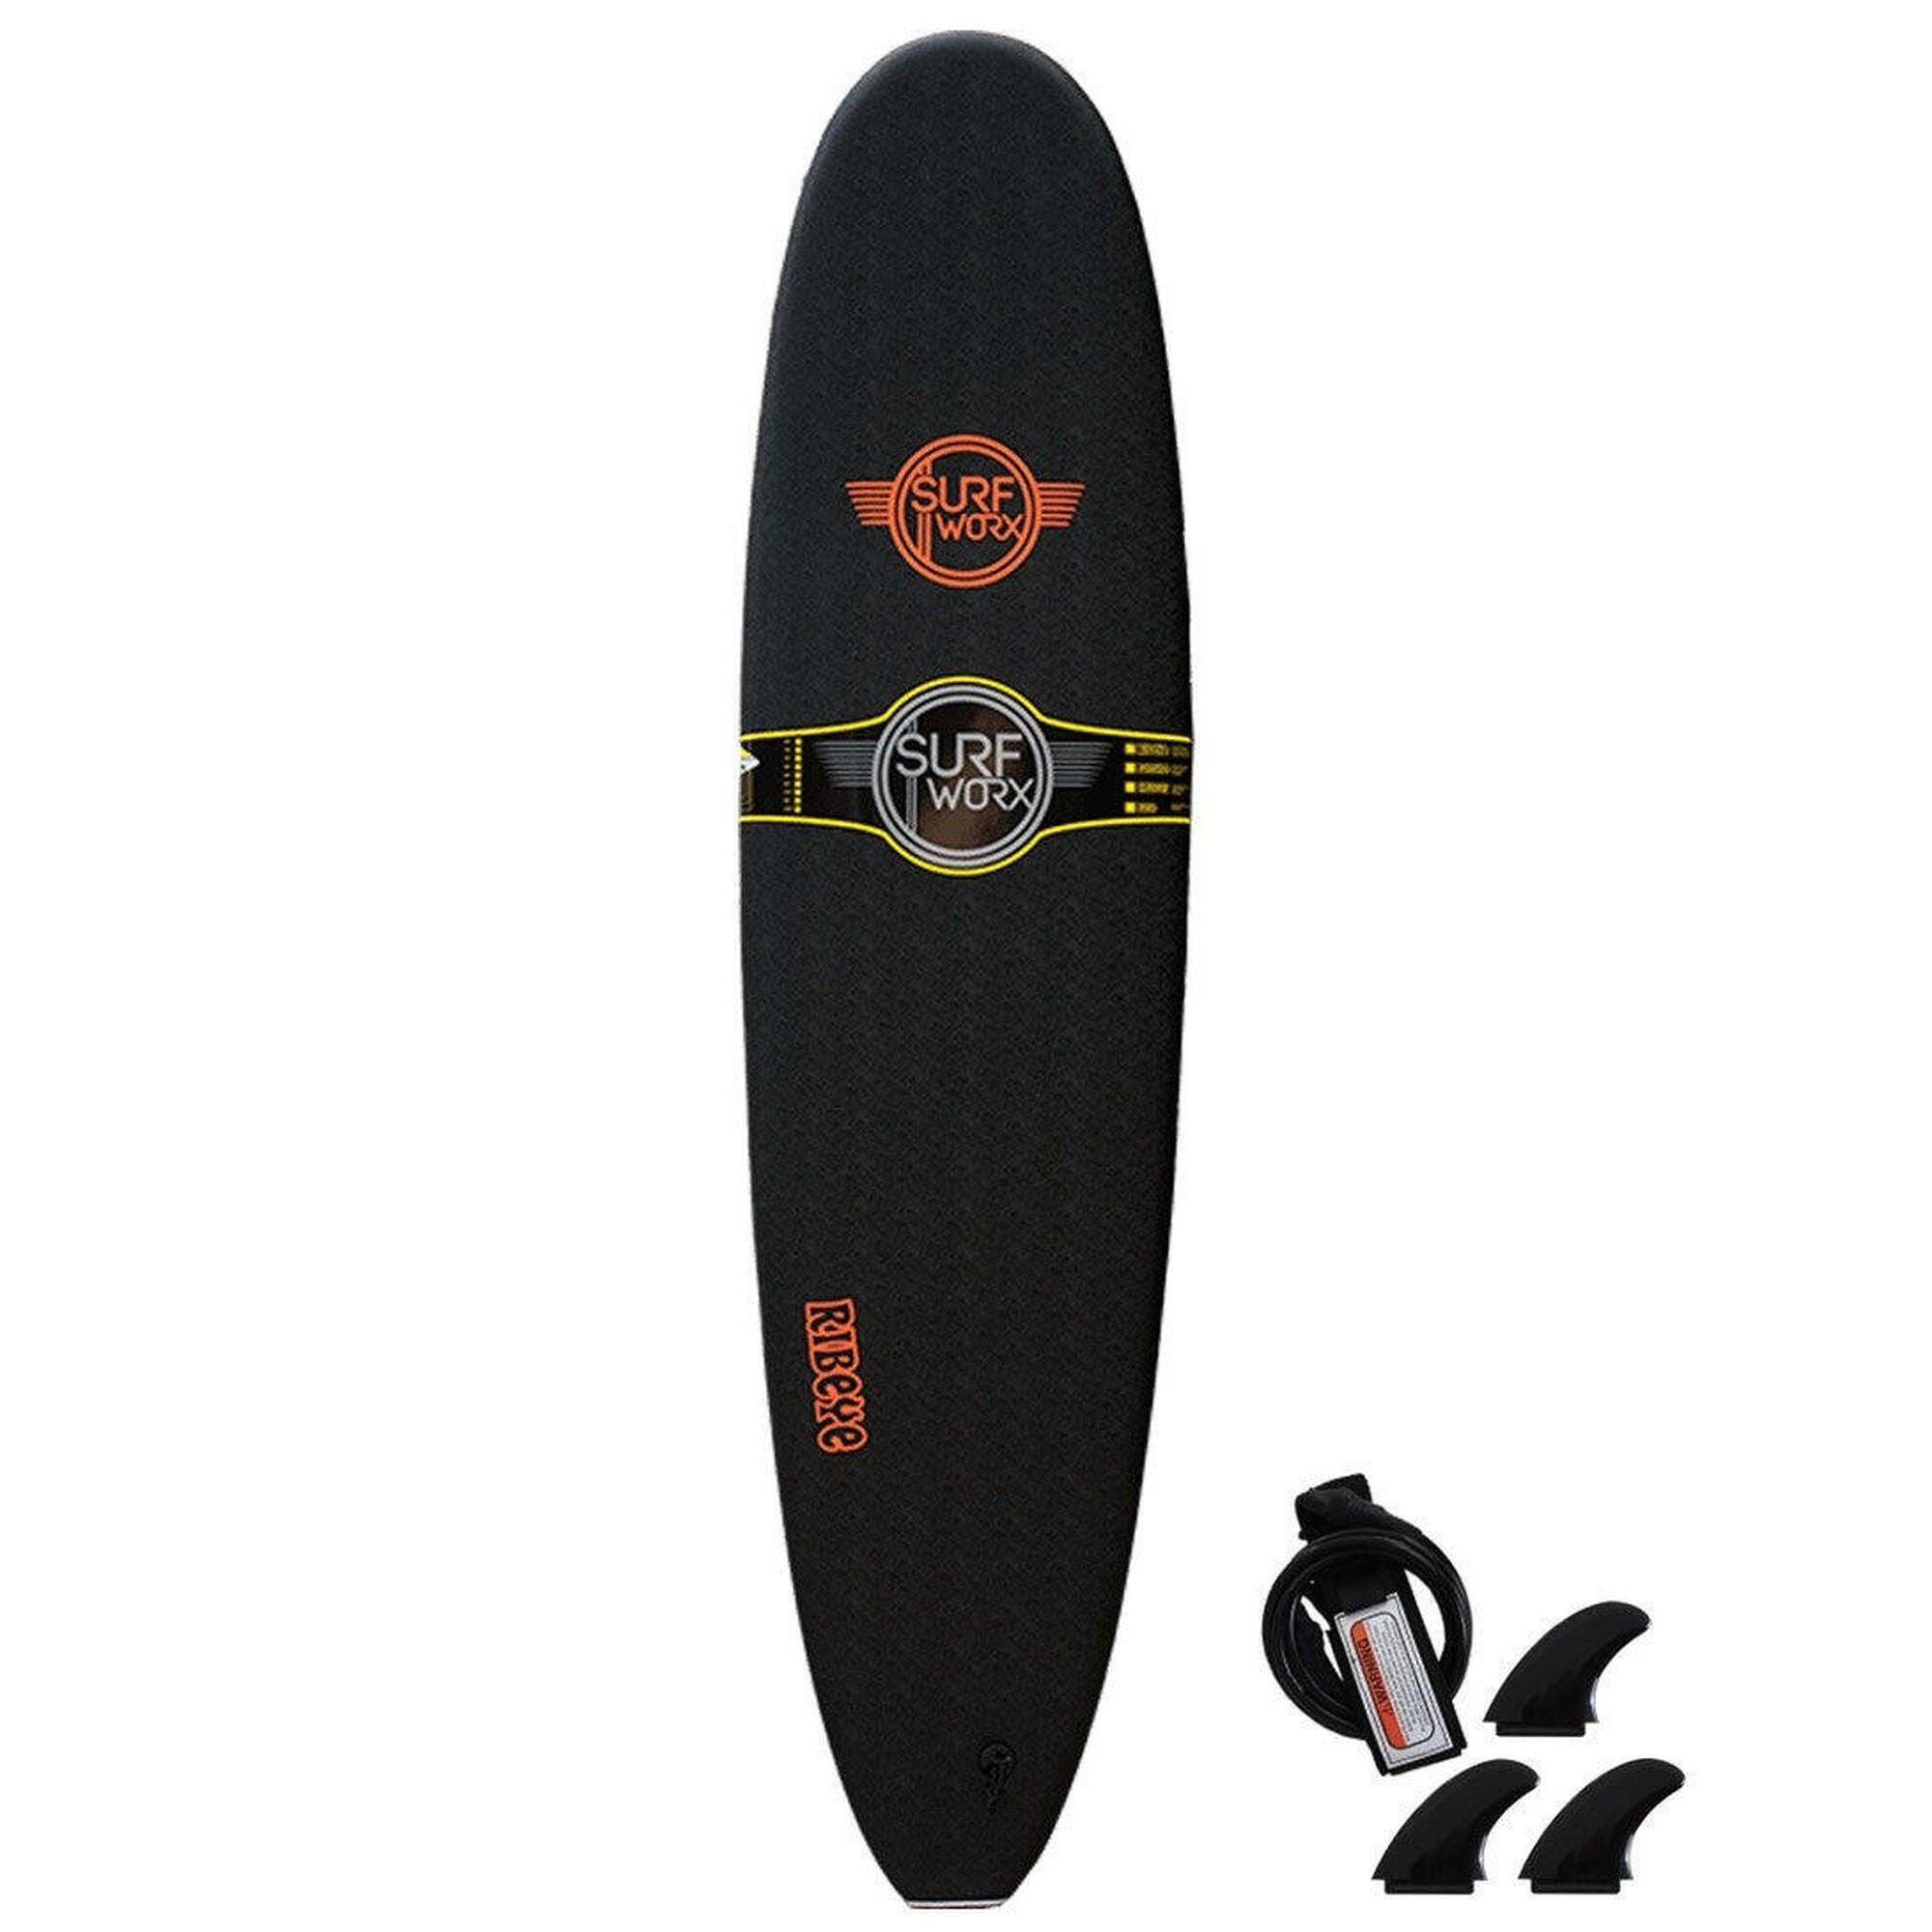 SURFWORX Surfworx Ribeye Mini Mal soft surfboard 7ft 0 Black